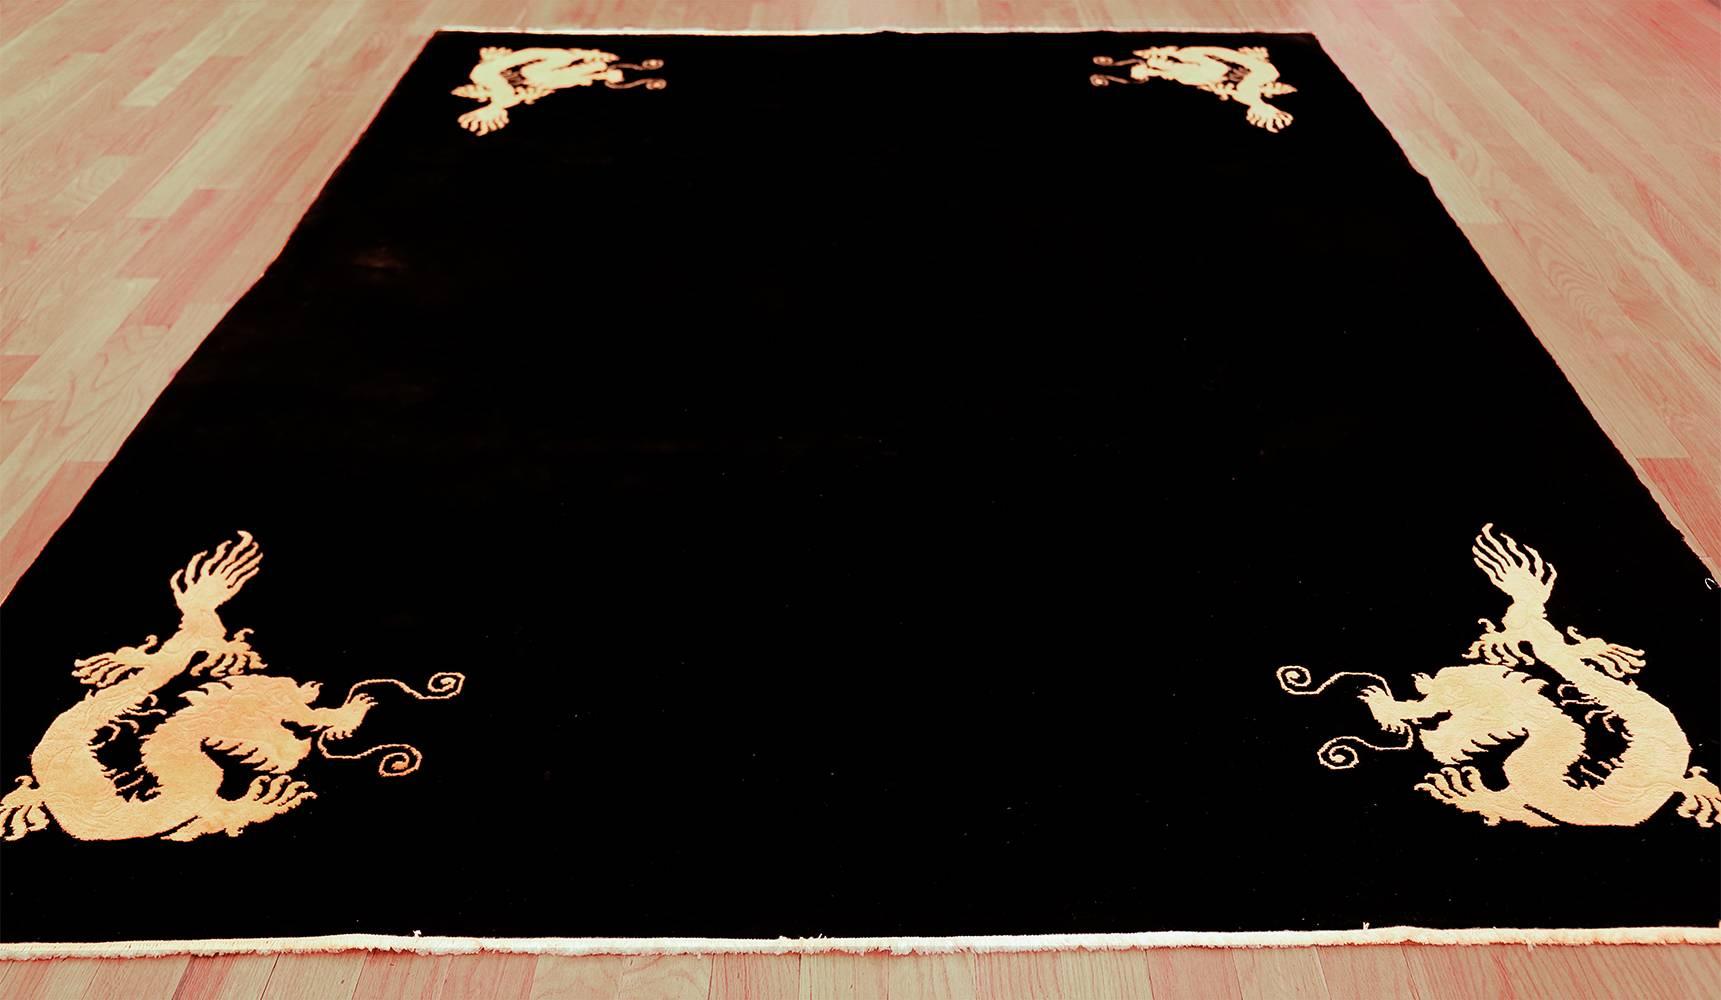 Benevolent Five Clawed Dragon Design Black Antique Chinese Rug. Size: 7' x 9' 6